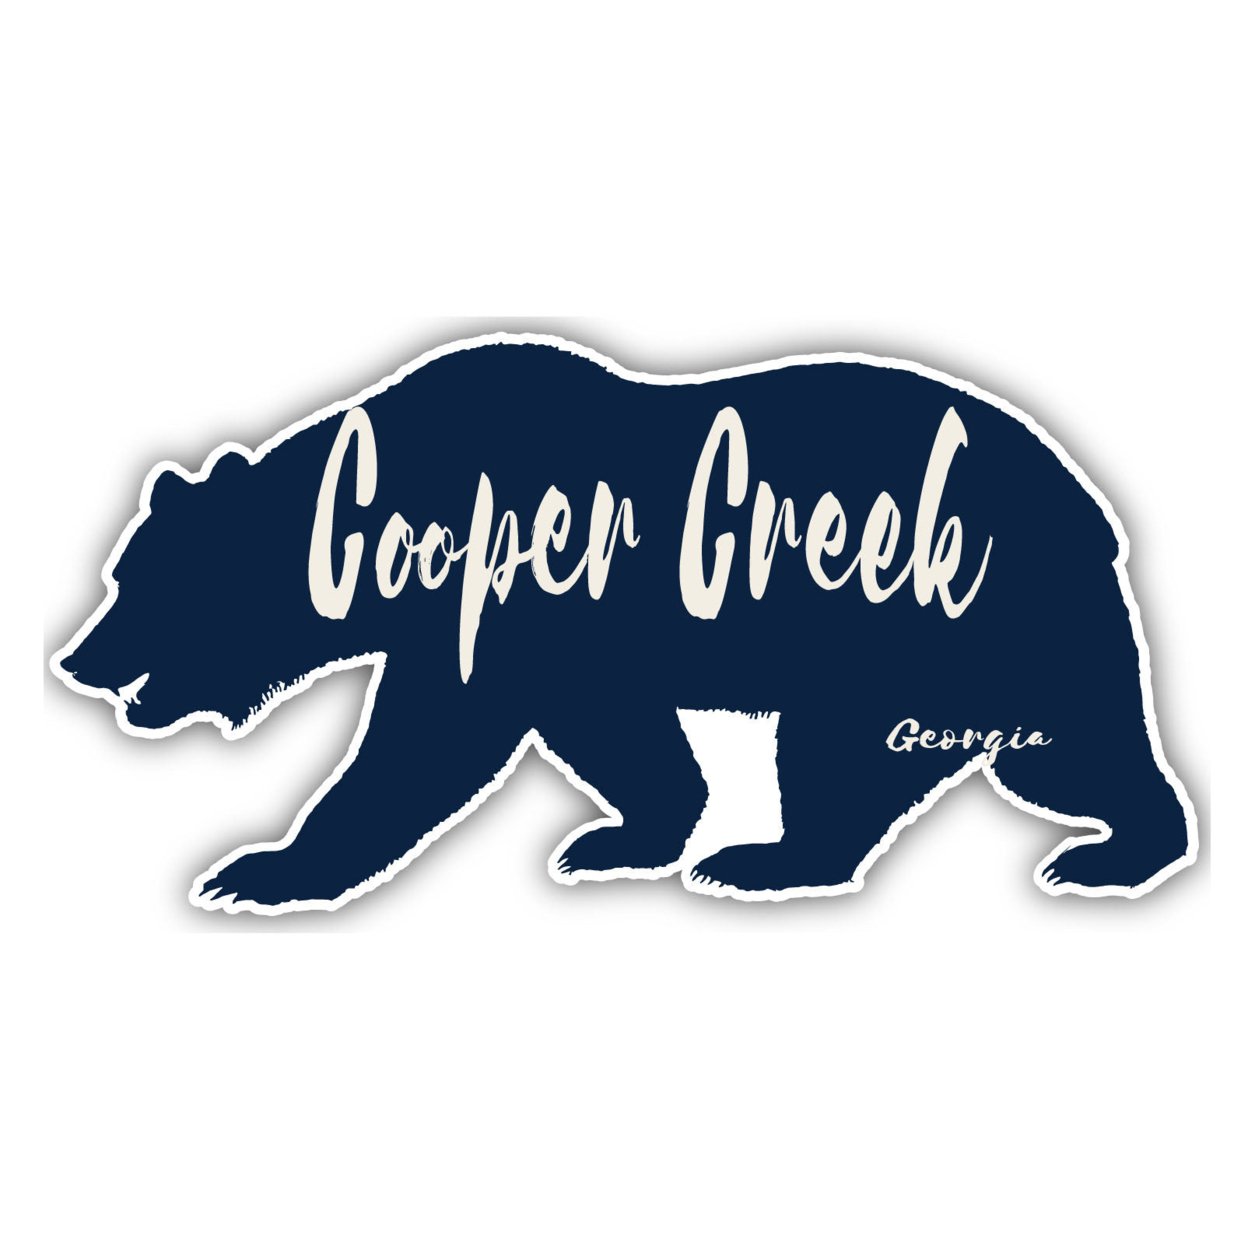 Cooper Creek Georgia Souvenir Decorative Stickers (Choose Theme And Size) - Single Unit, 4-Inch, Bear